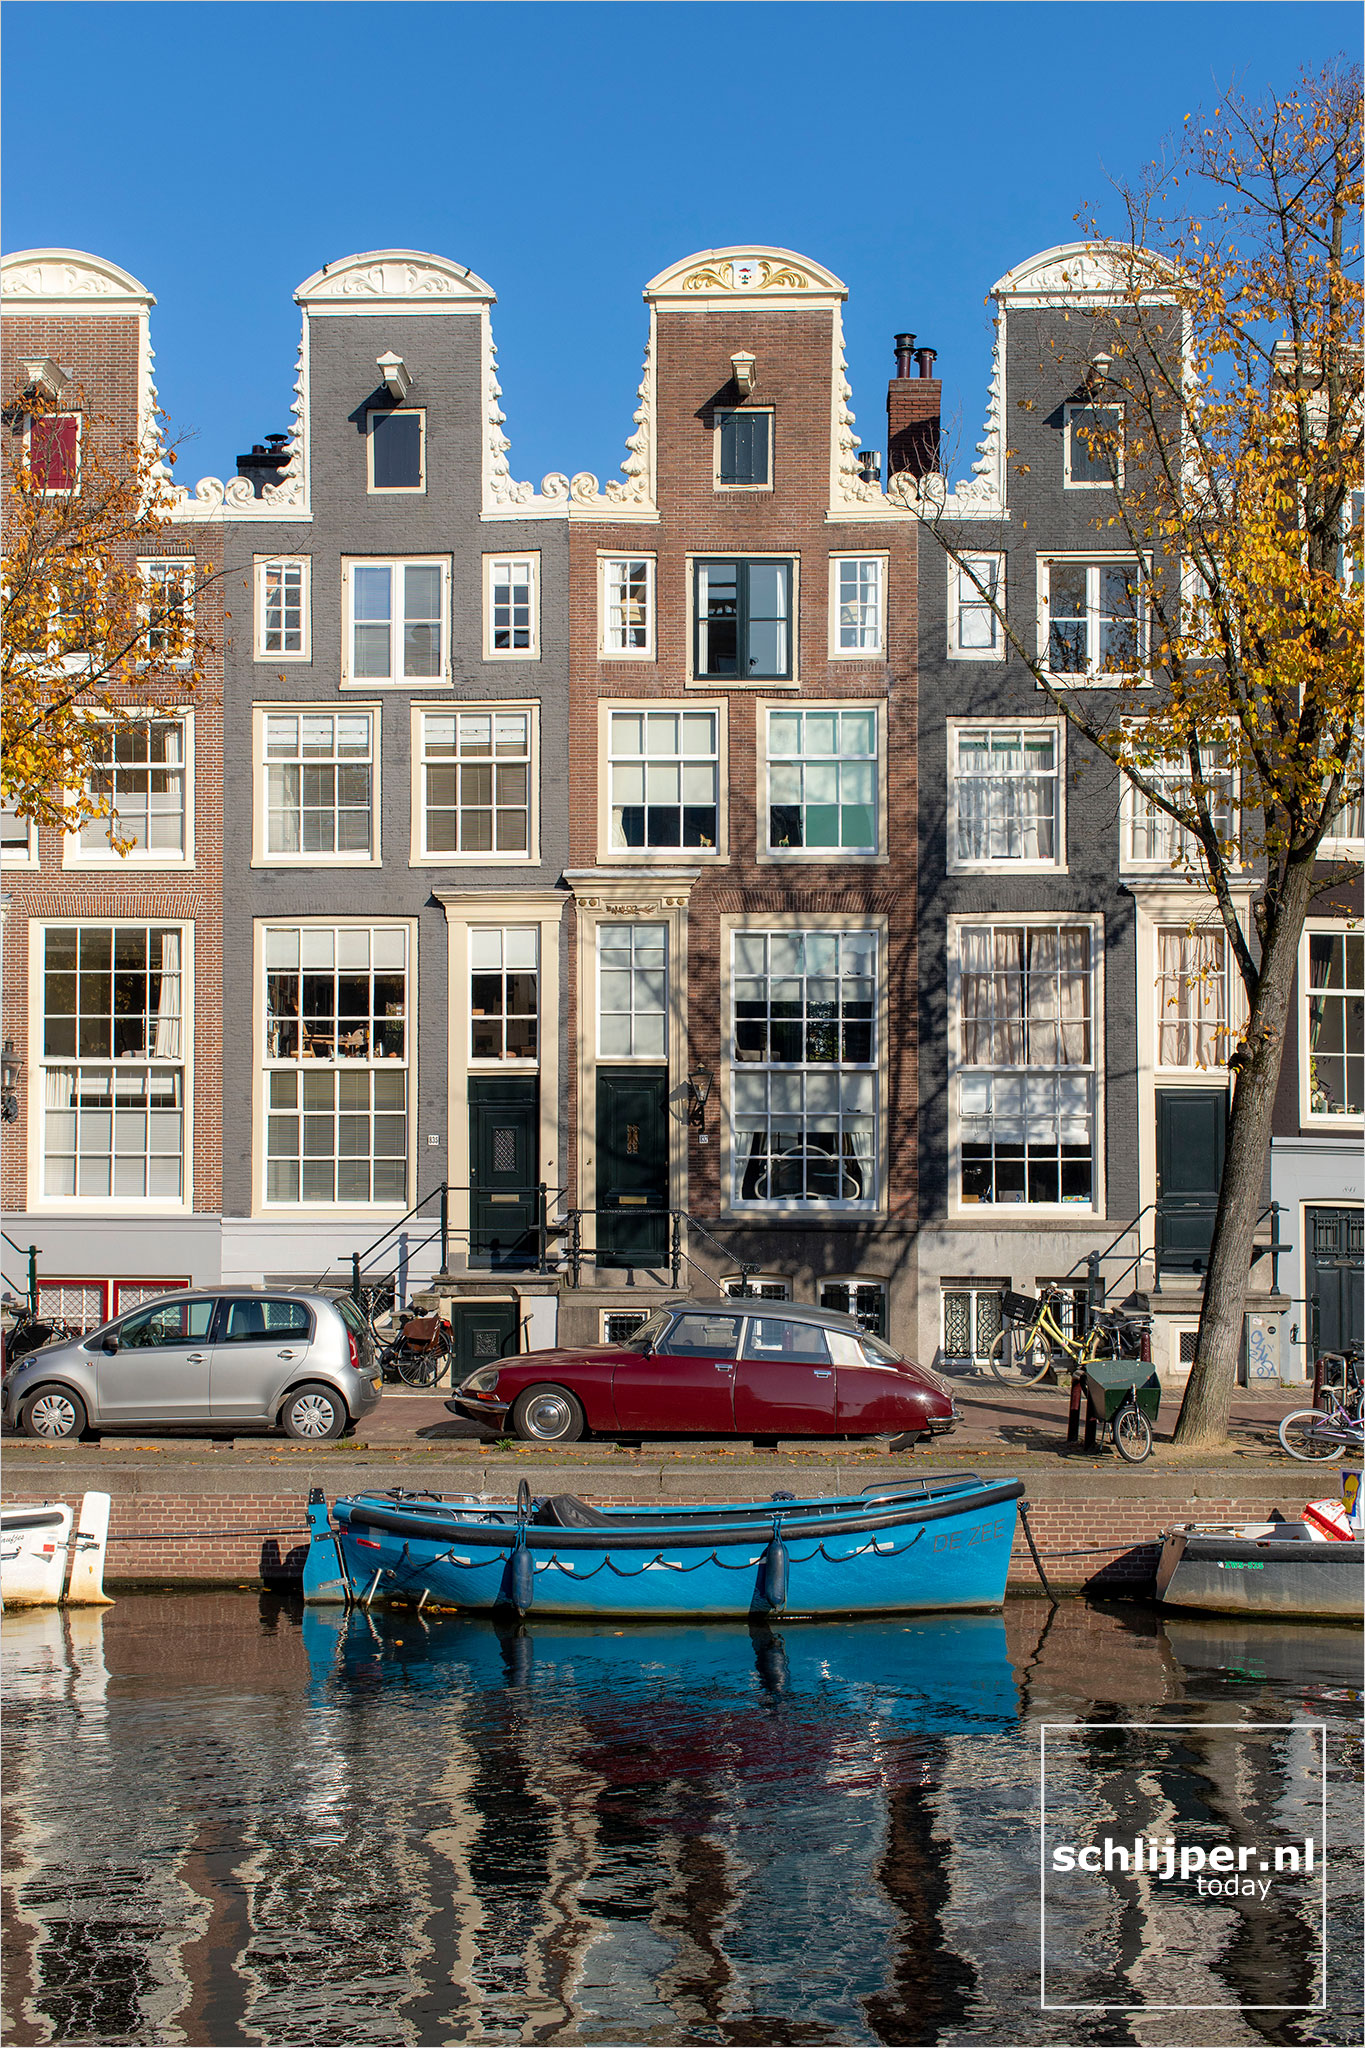 Nederland, Amsterdam, 23 oktober 2020